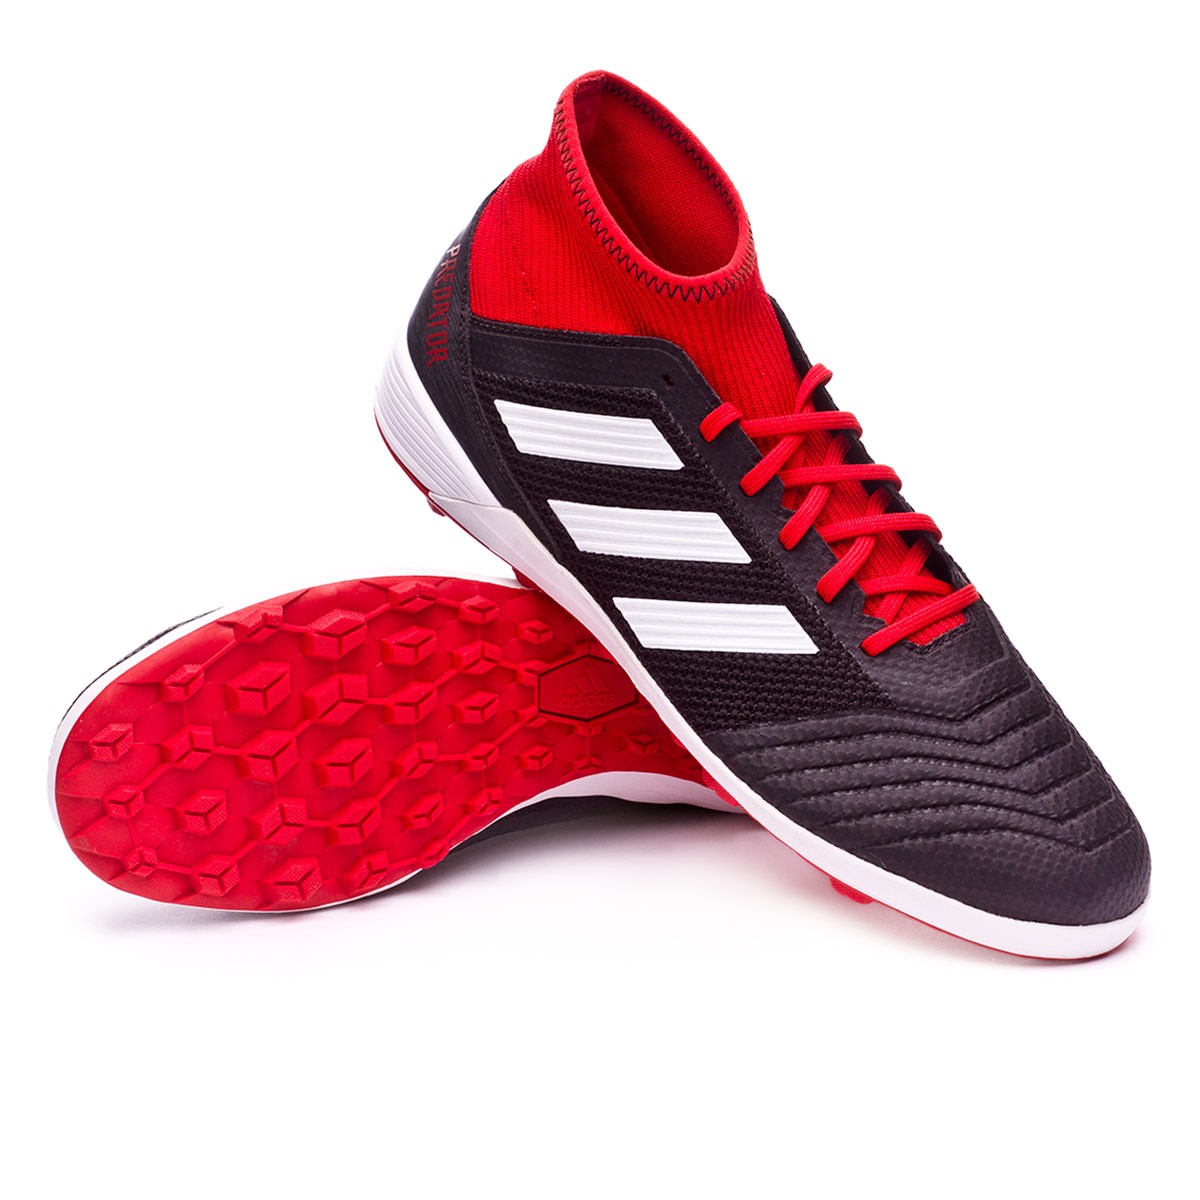 Football Boot adidas Predator Tango 18.3 Turf Core black-White-Solar red -  Football store Fútbol Emotion